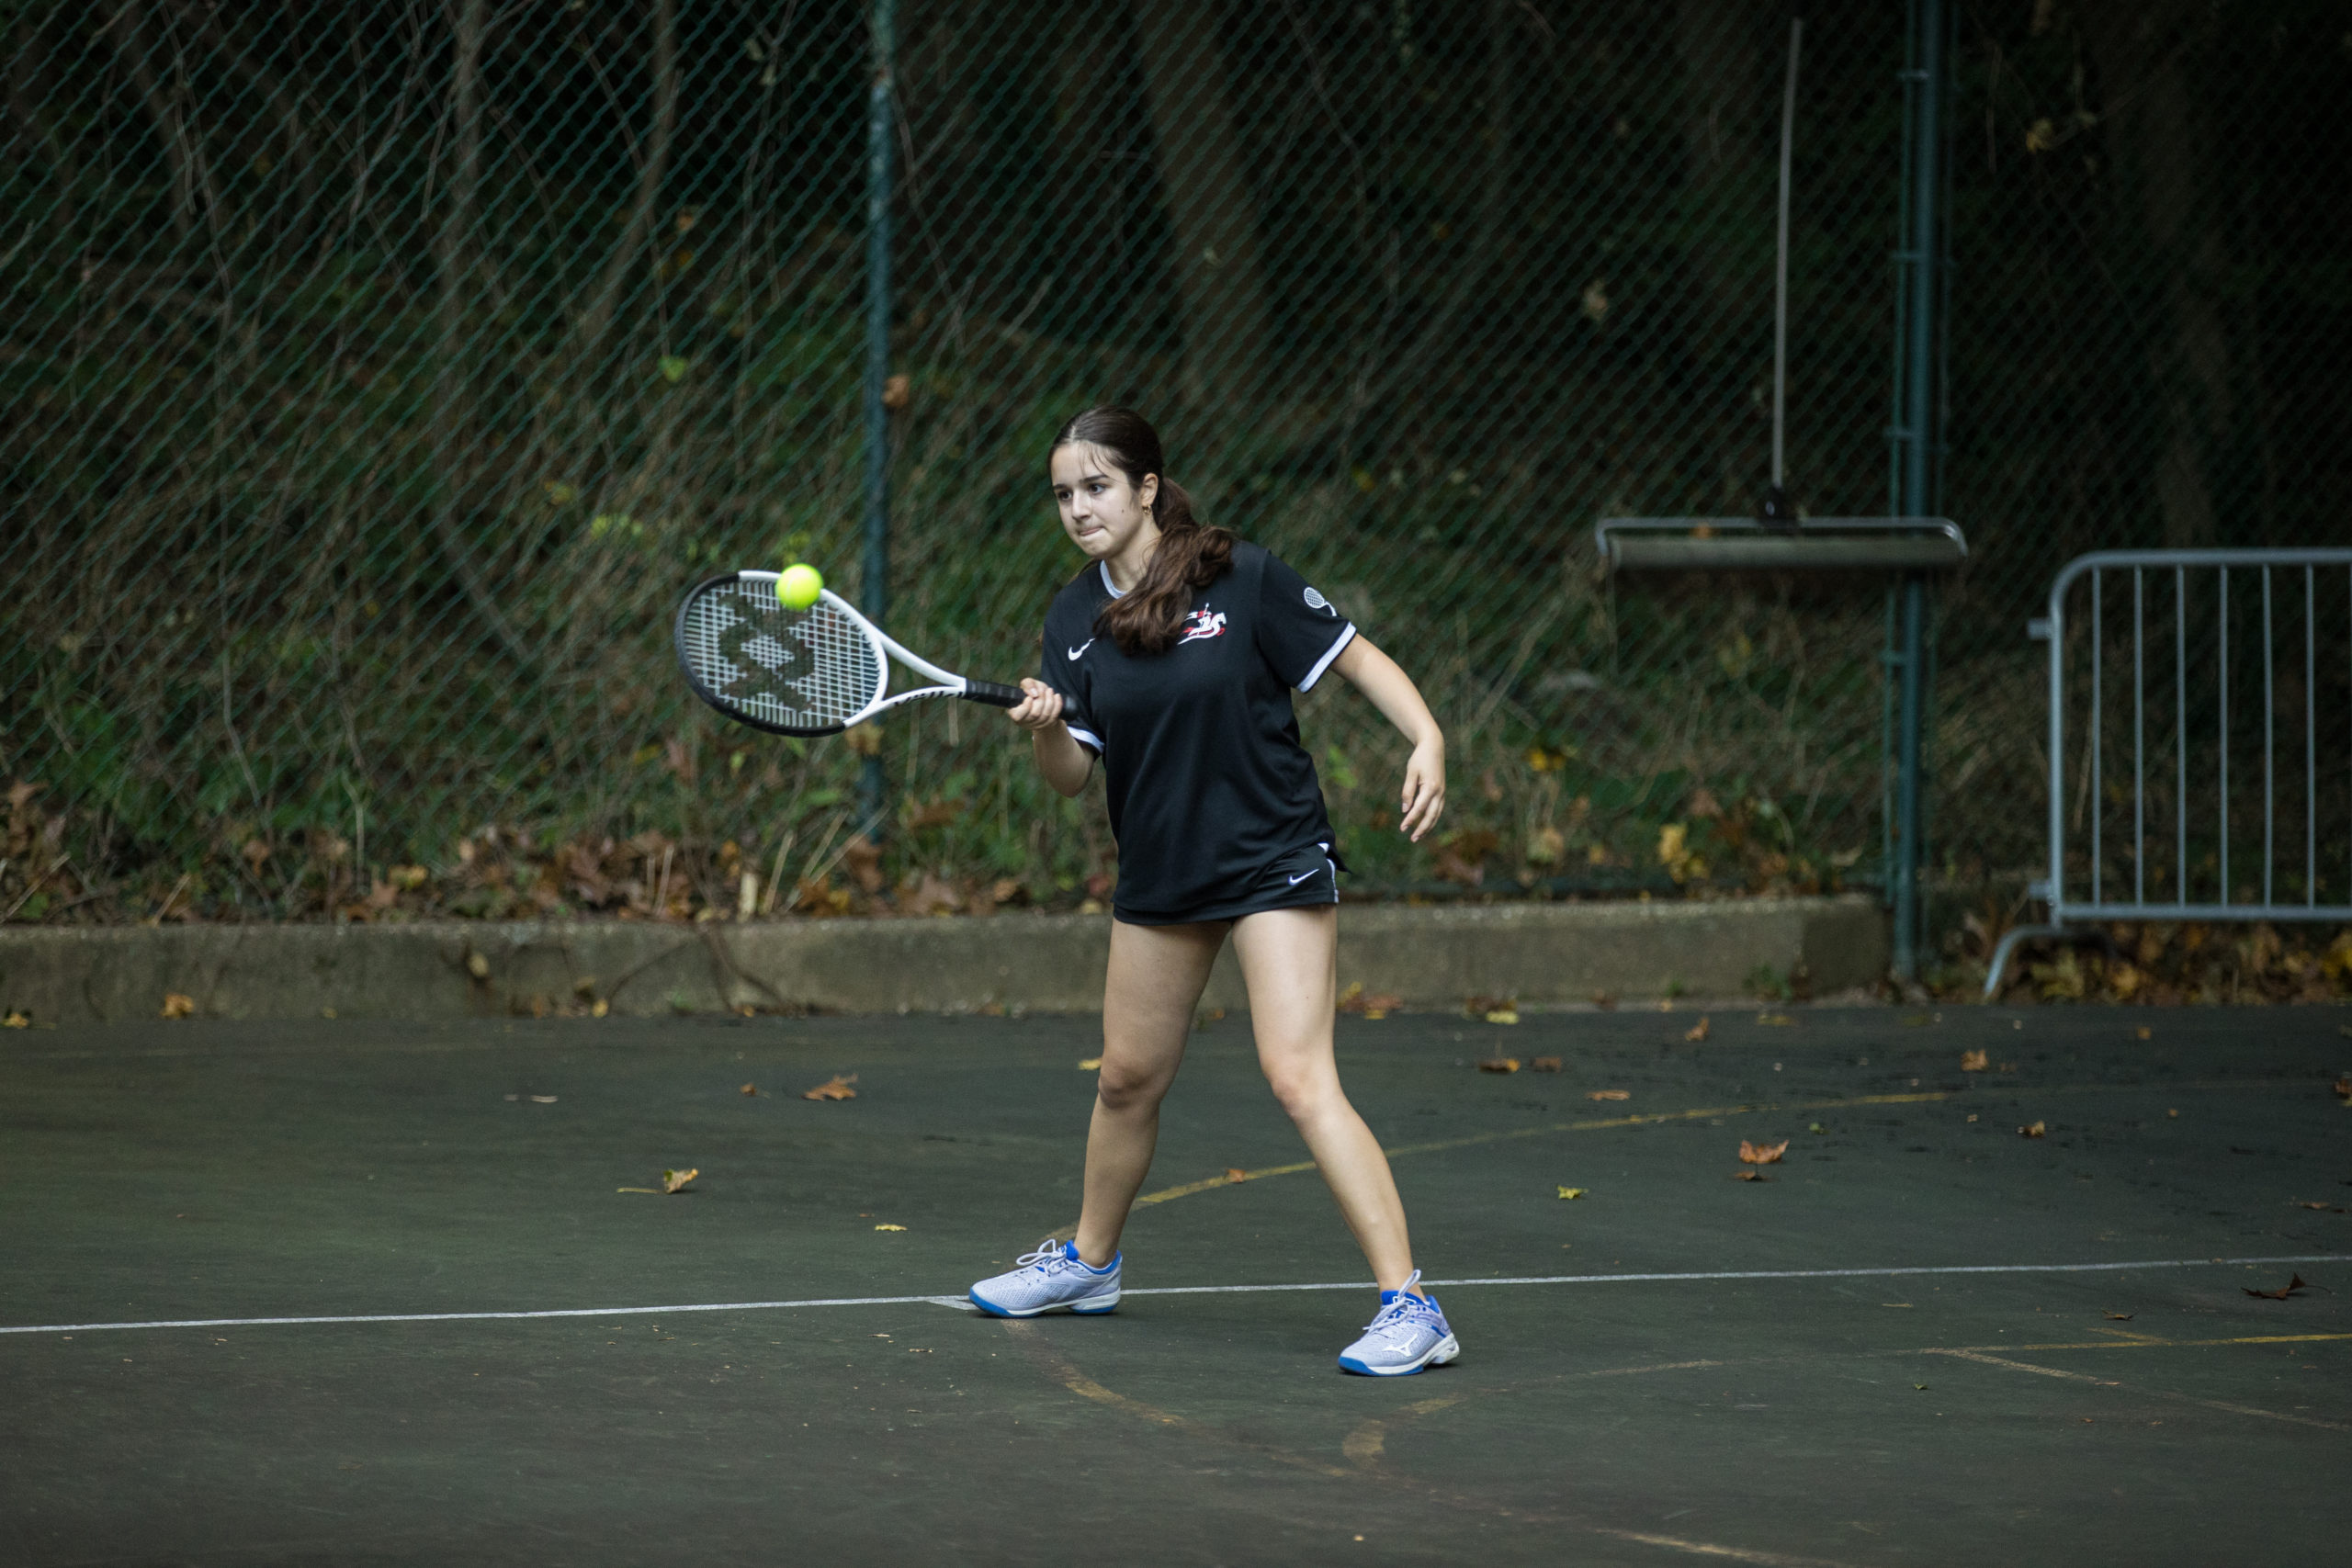 Girls Tennis Player hitting ball